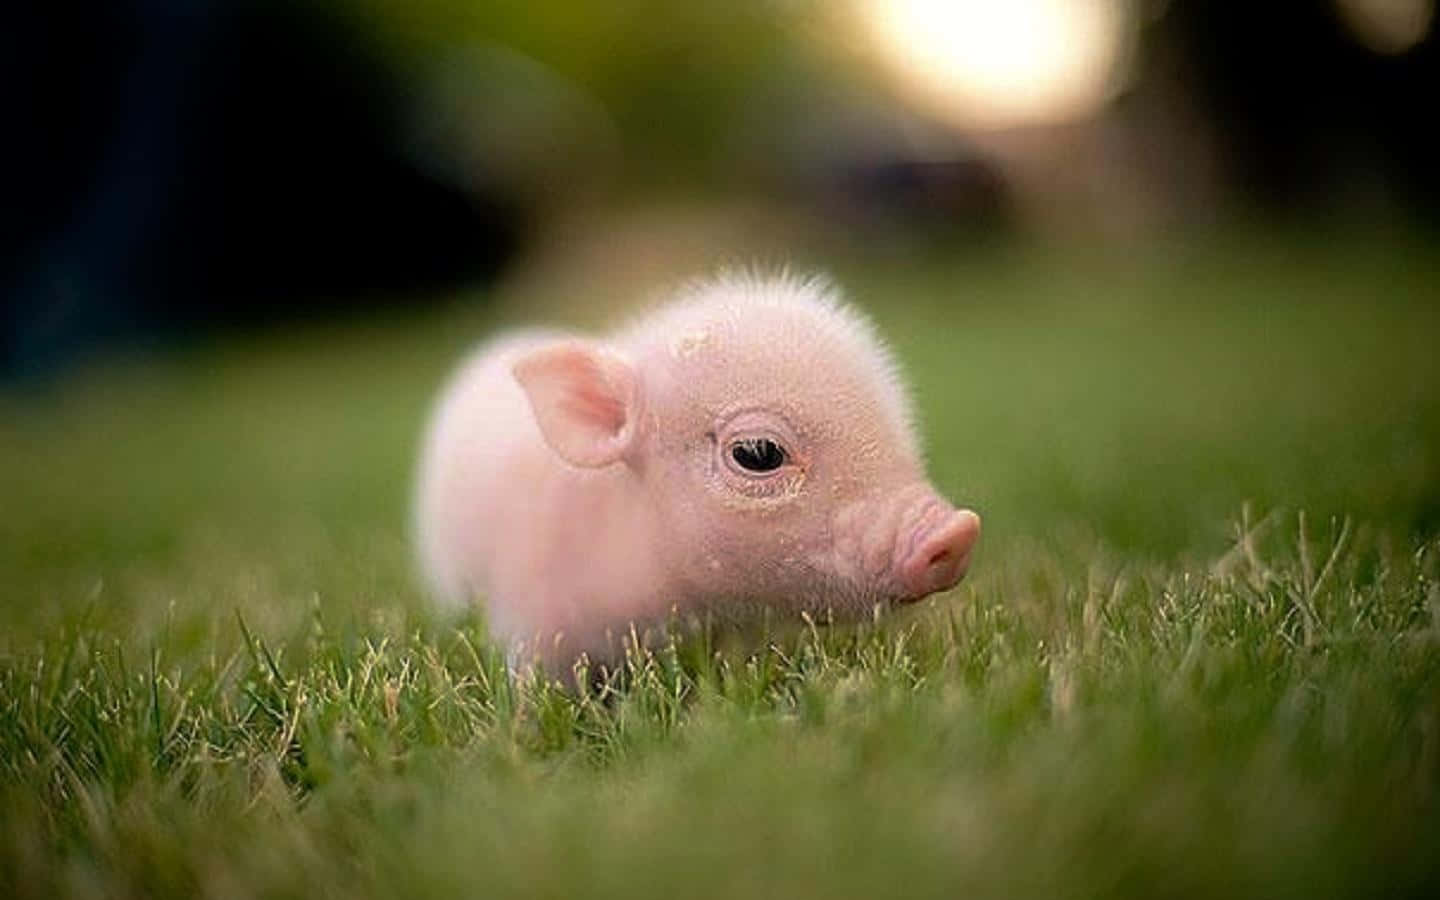 "Pig enjoying a sunny day"